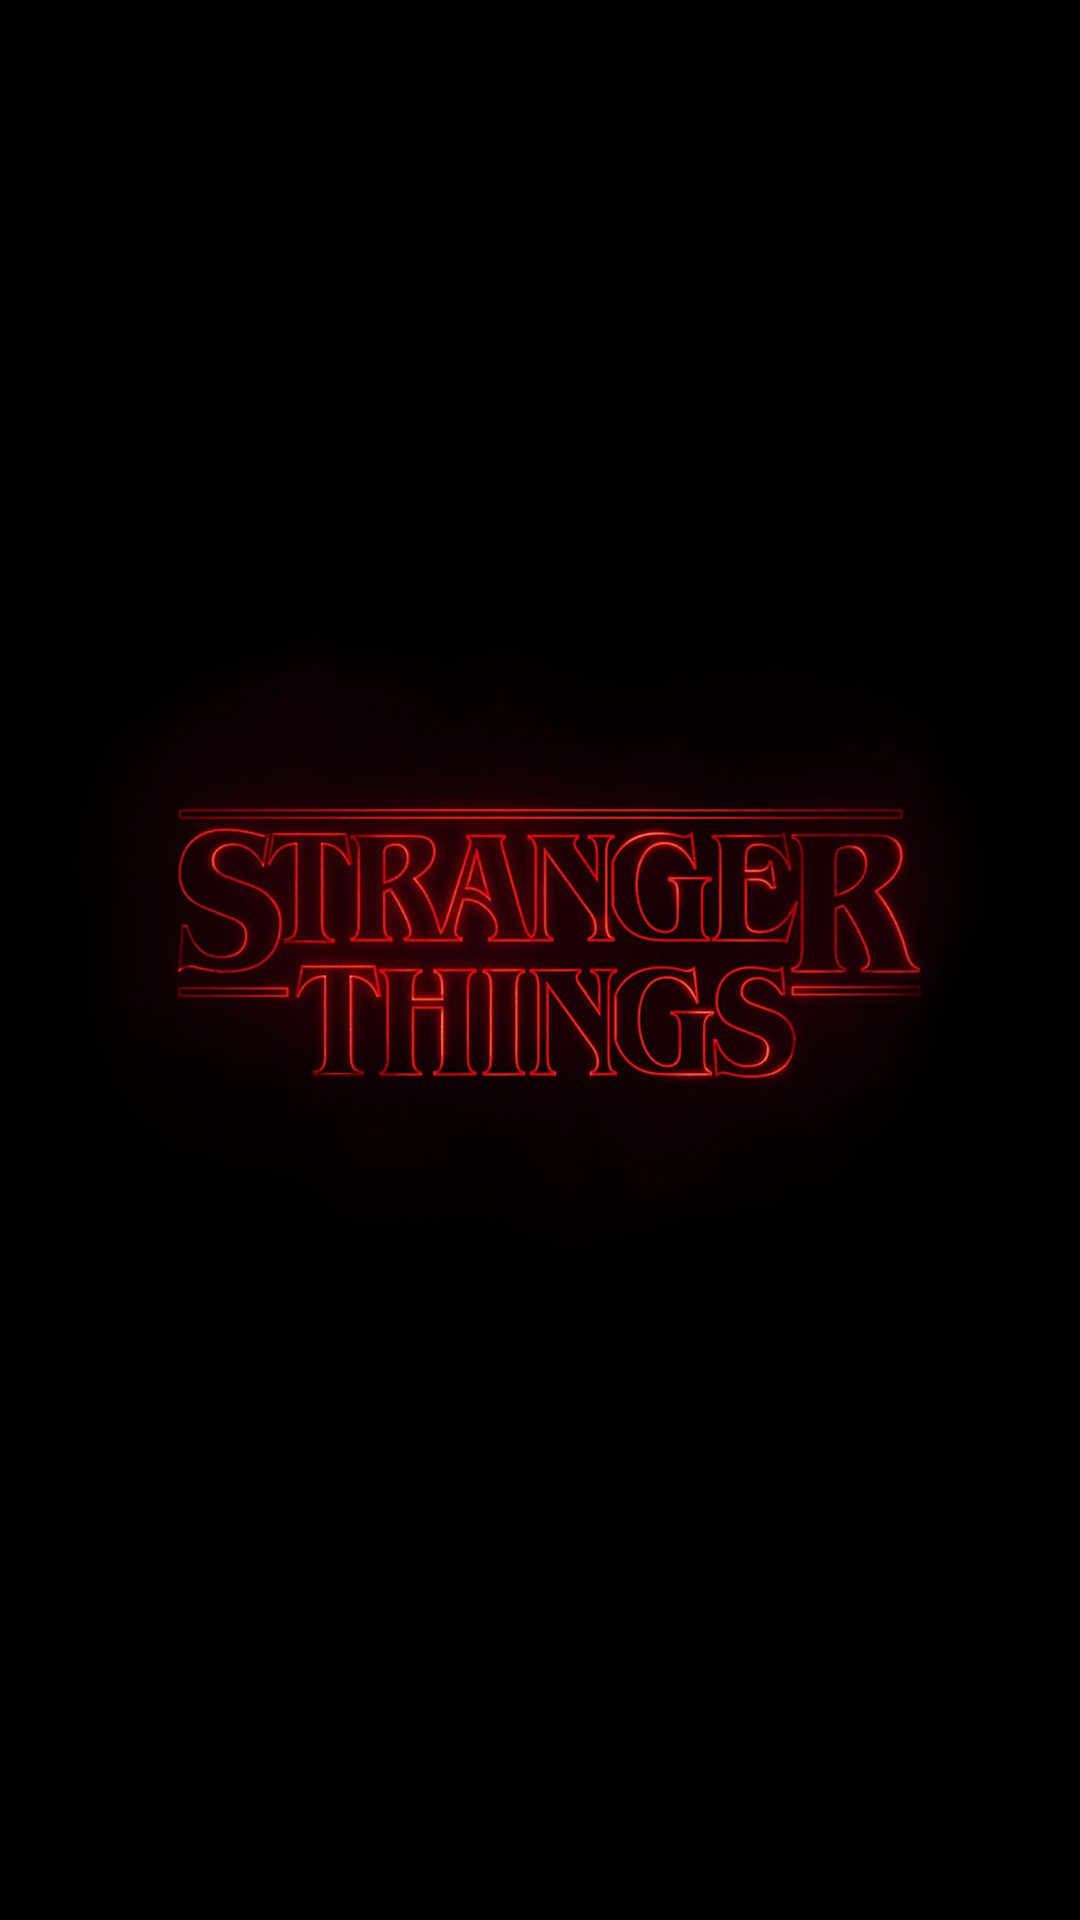 Fondos de pantalla de Stranger Things - FondosMil